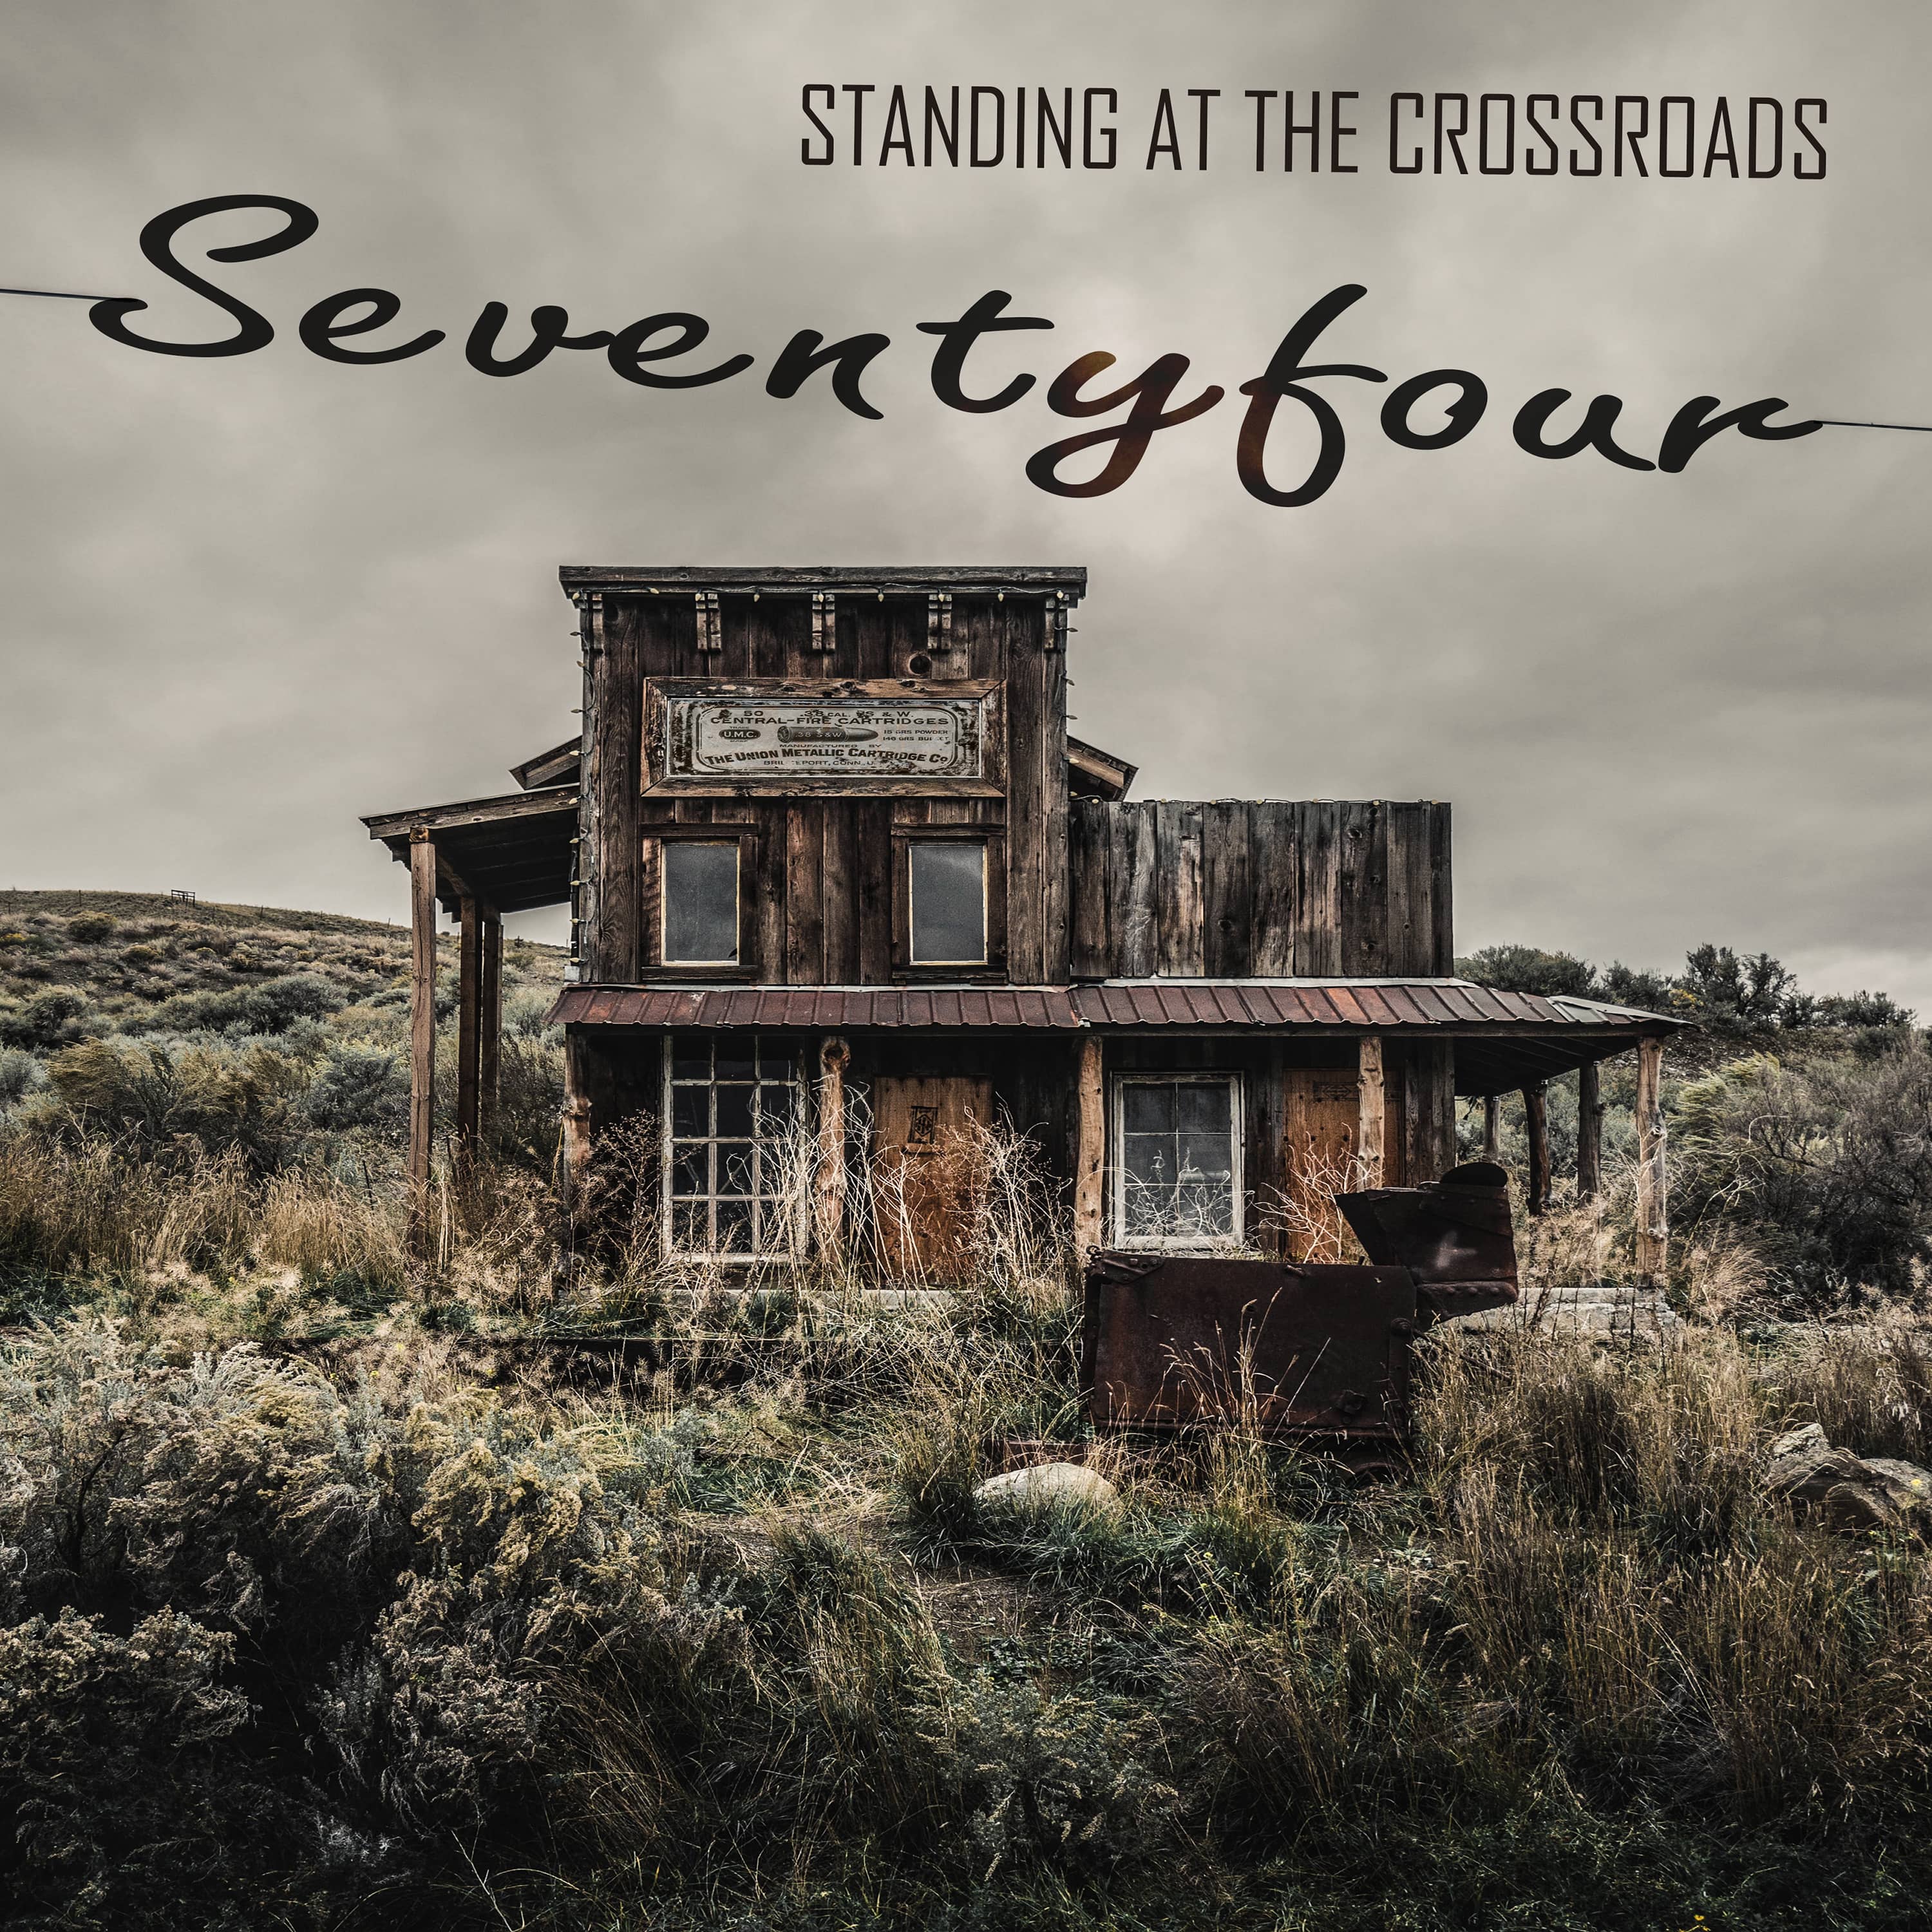 Seventyfour lanzan nuevo single "Standing at The Crossroads